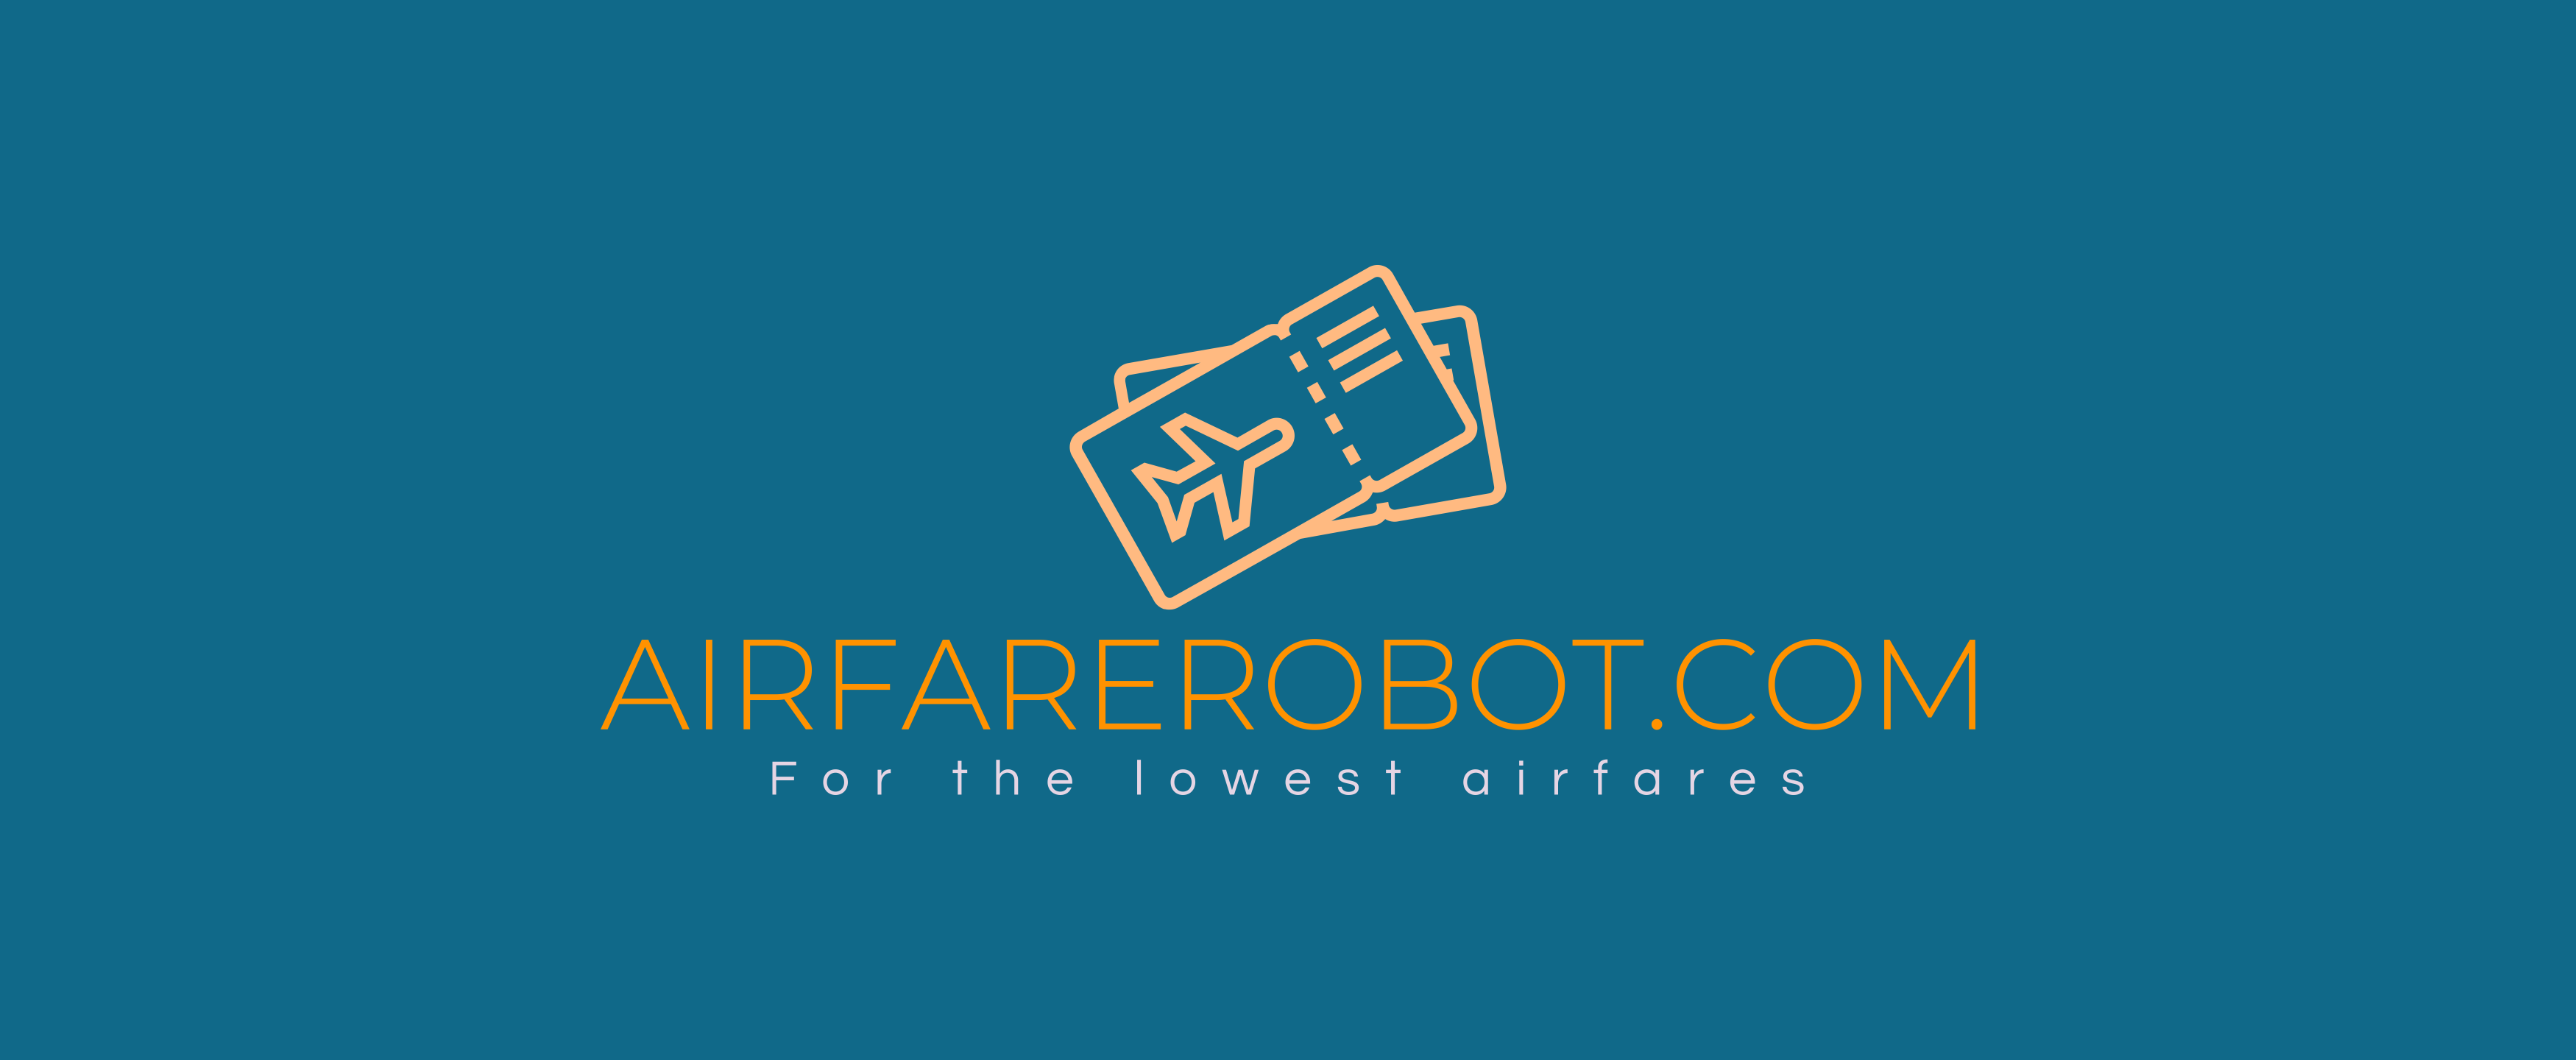 AirfareRobot